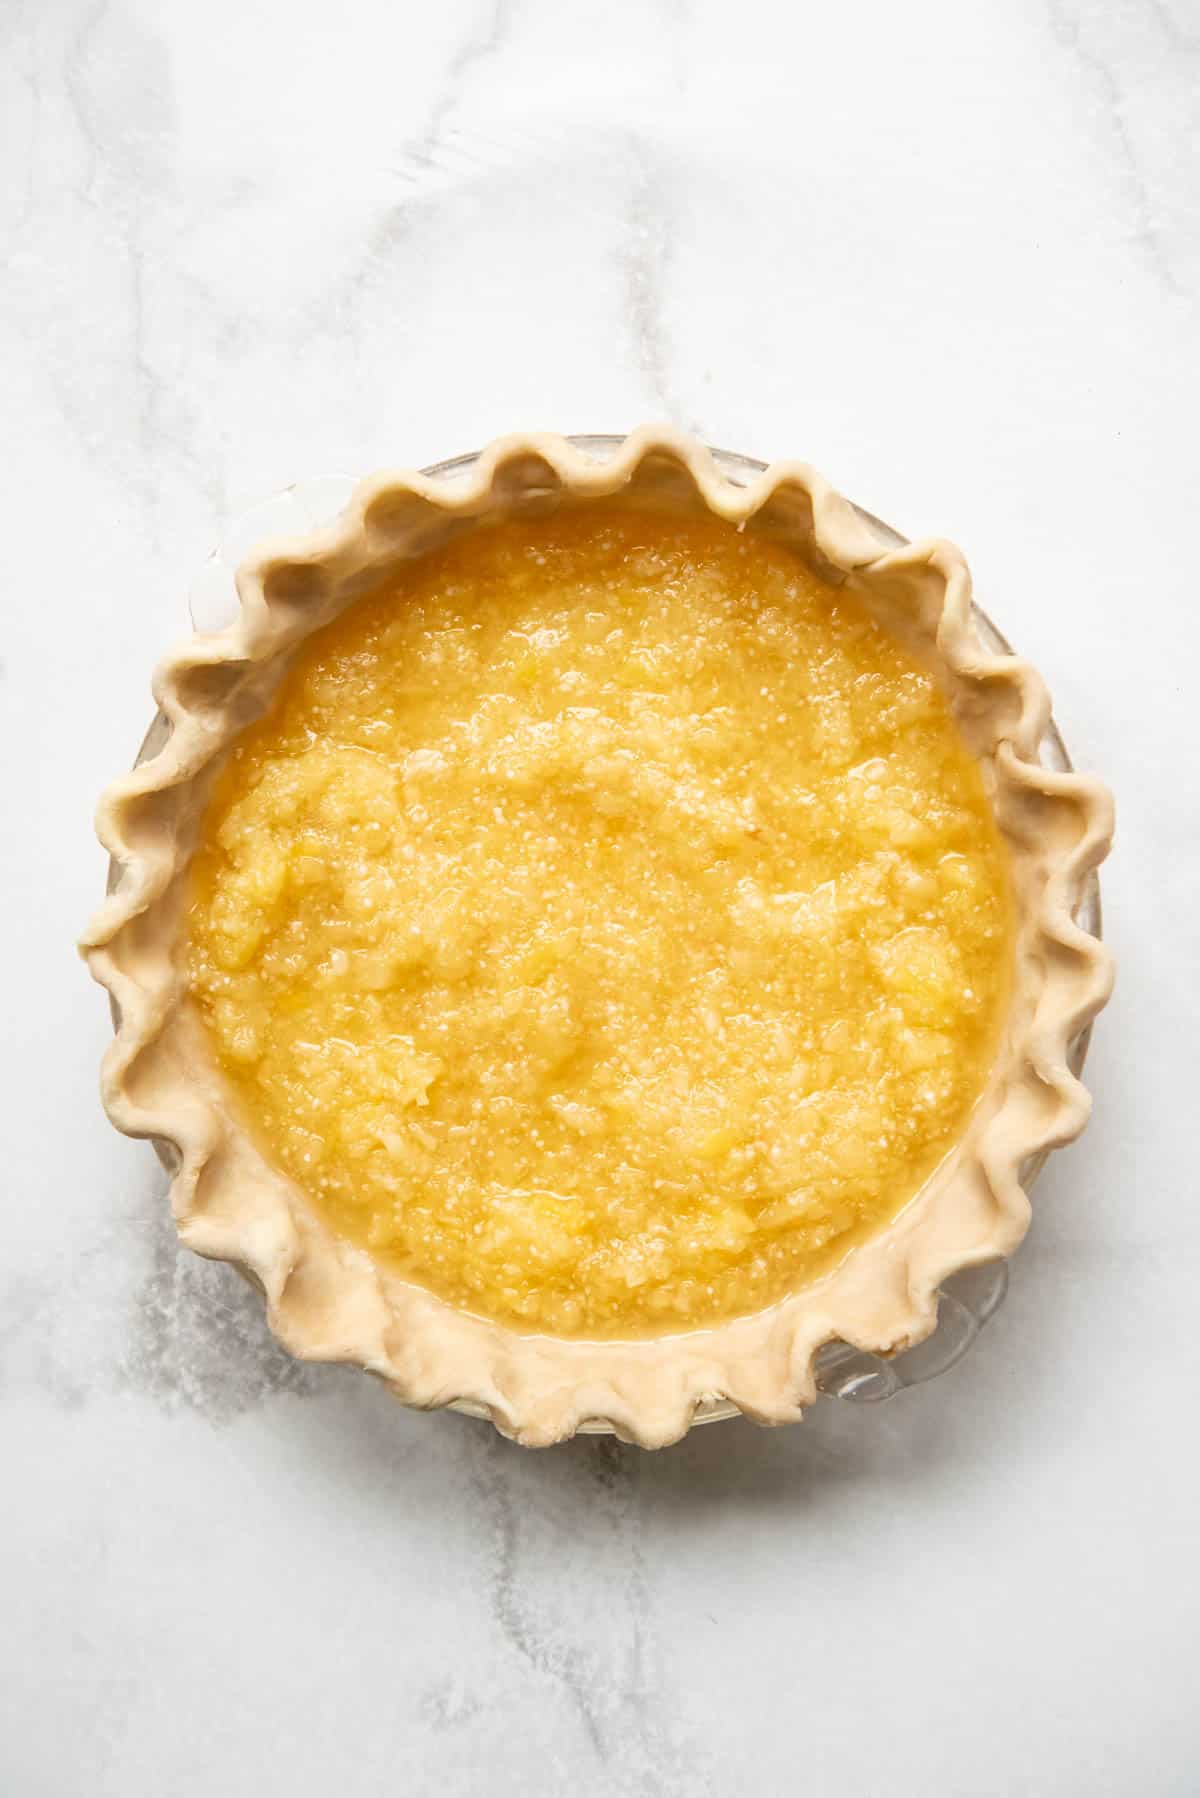 Pineapple pie filling in an unbaked pie crust.